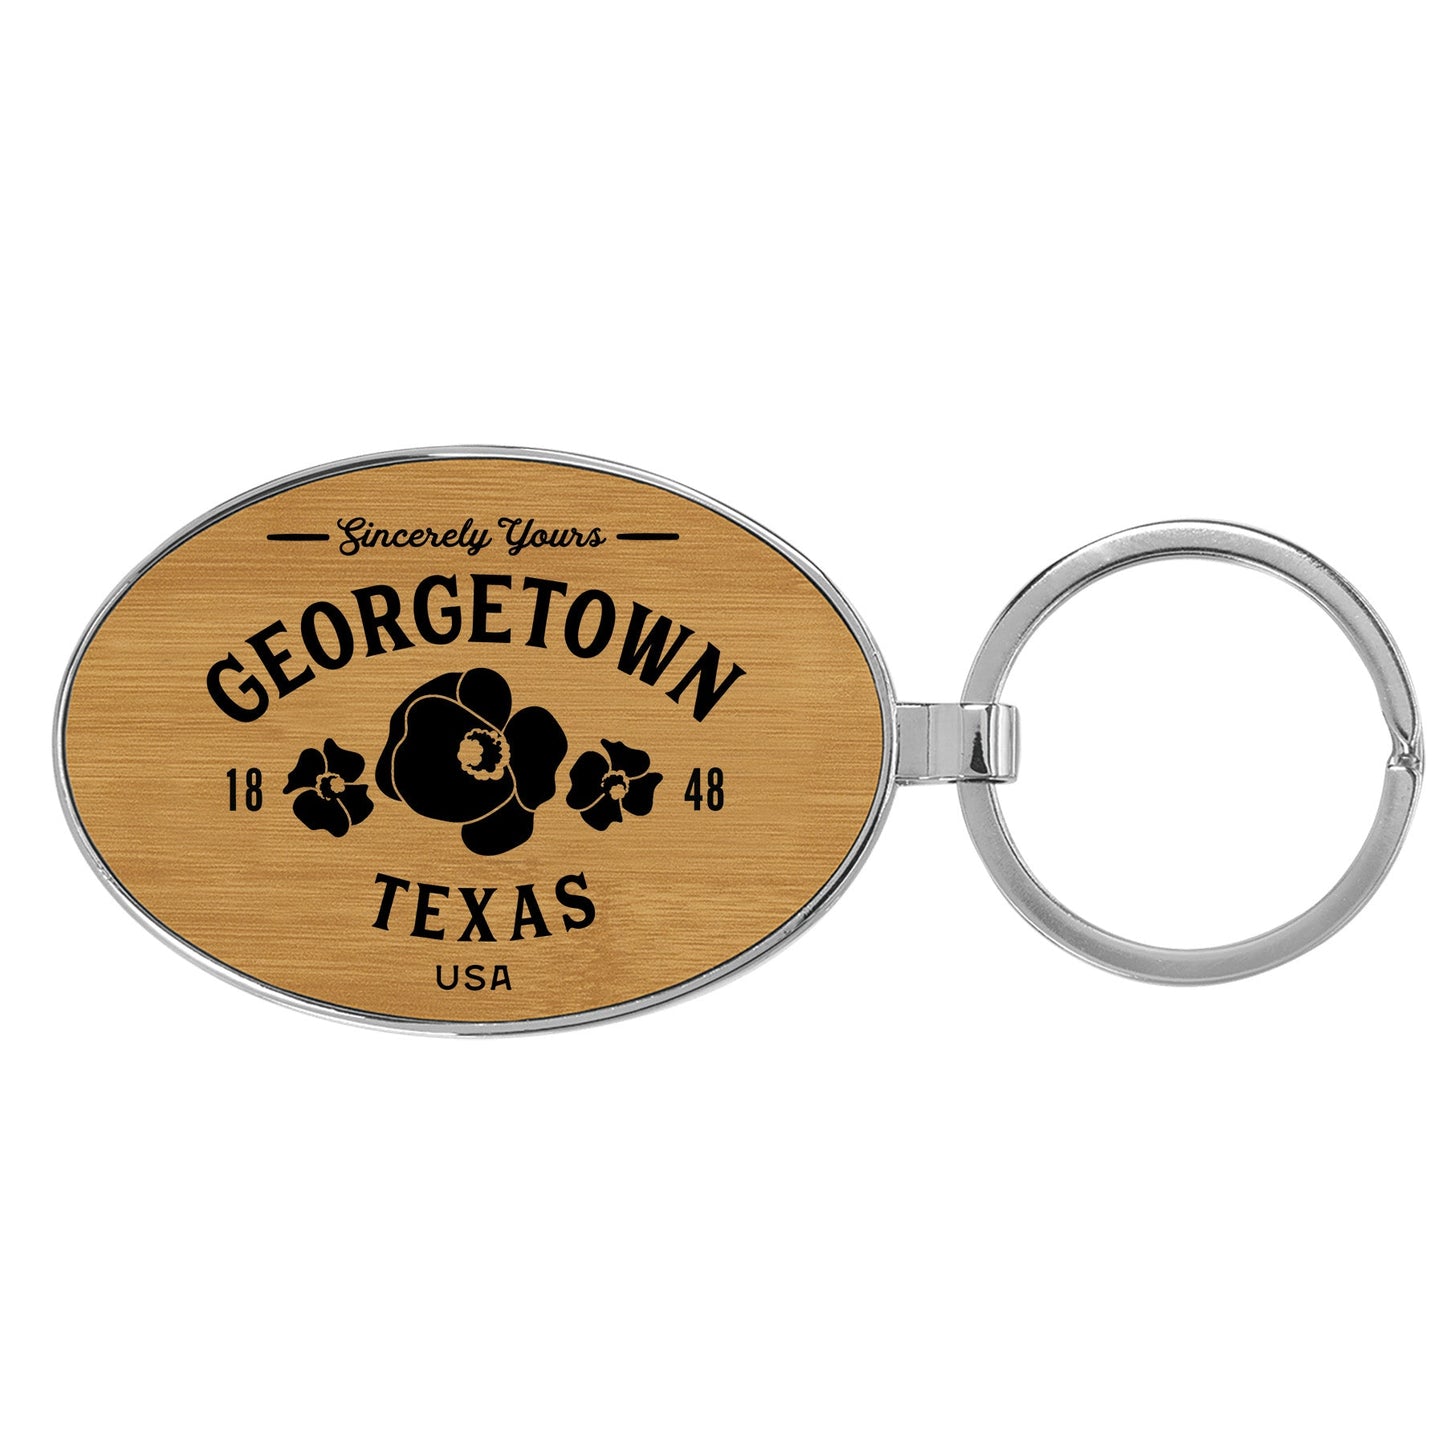 Georgetown Texas Key Tag